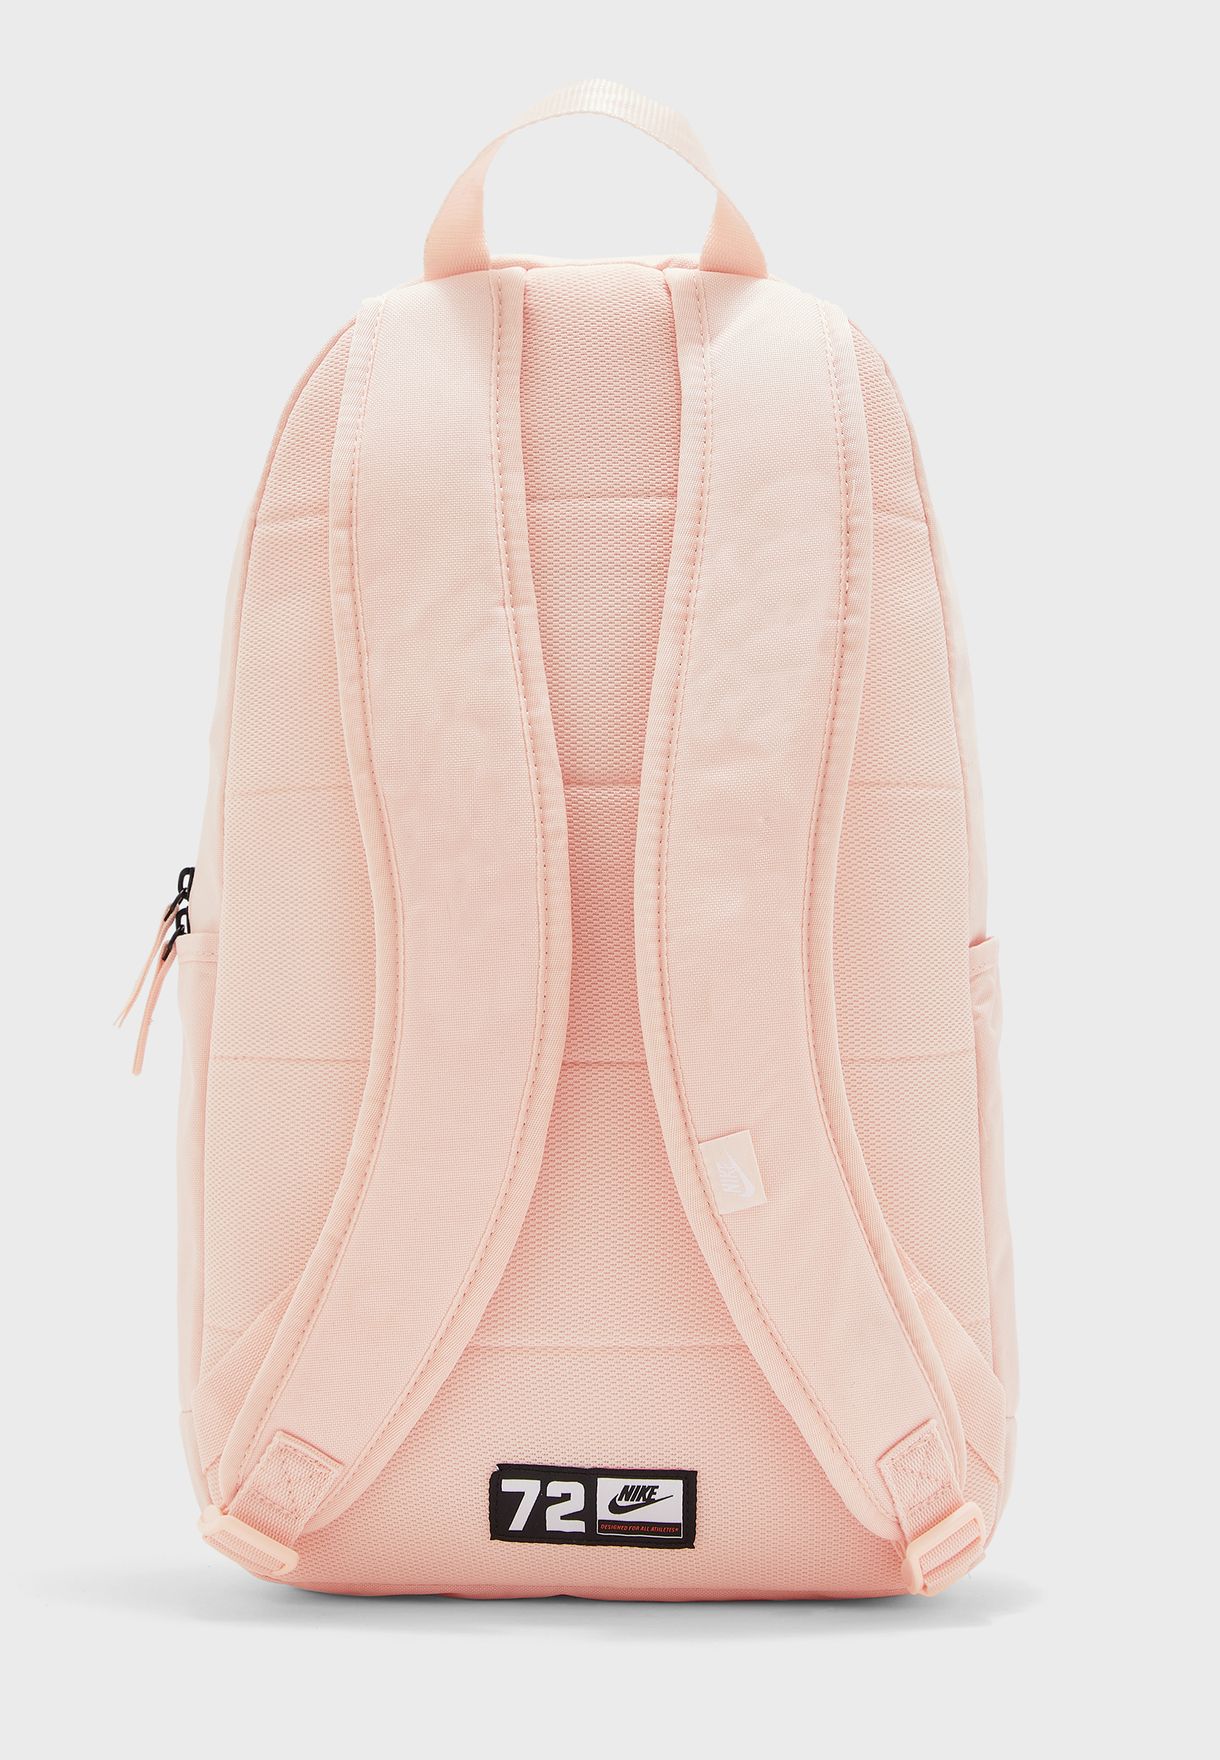 nike light pink backpack